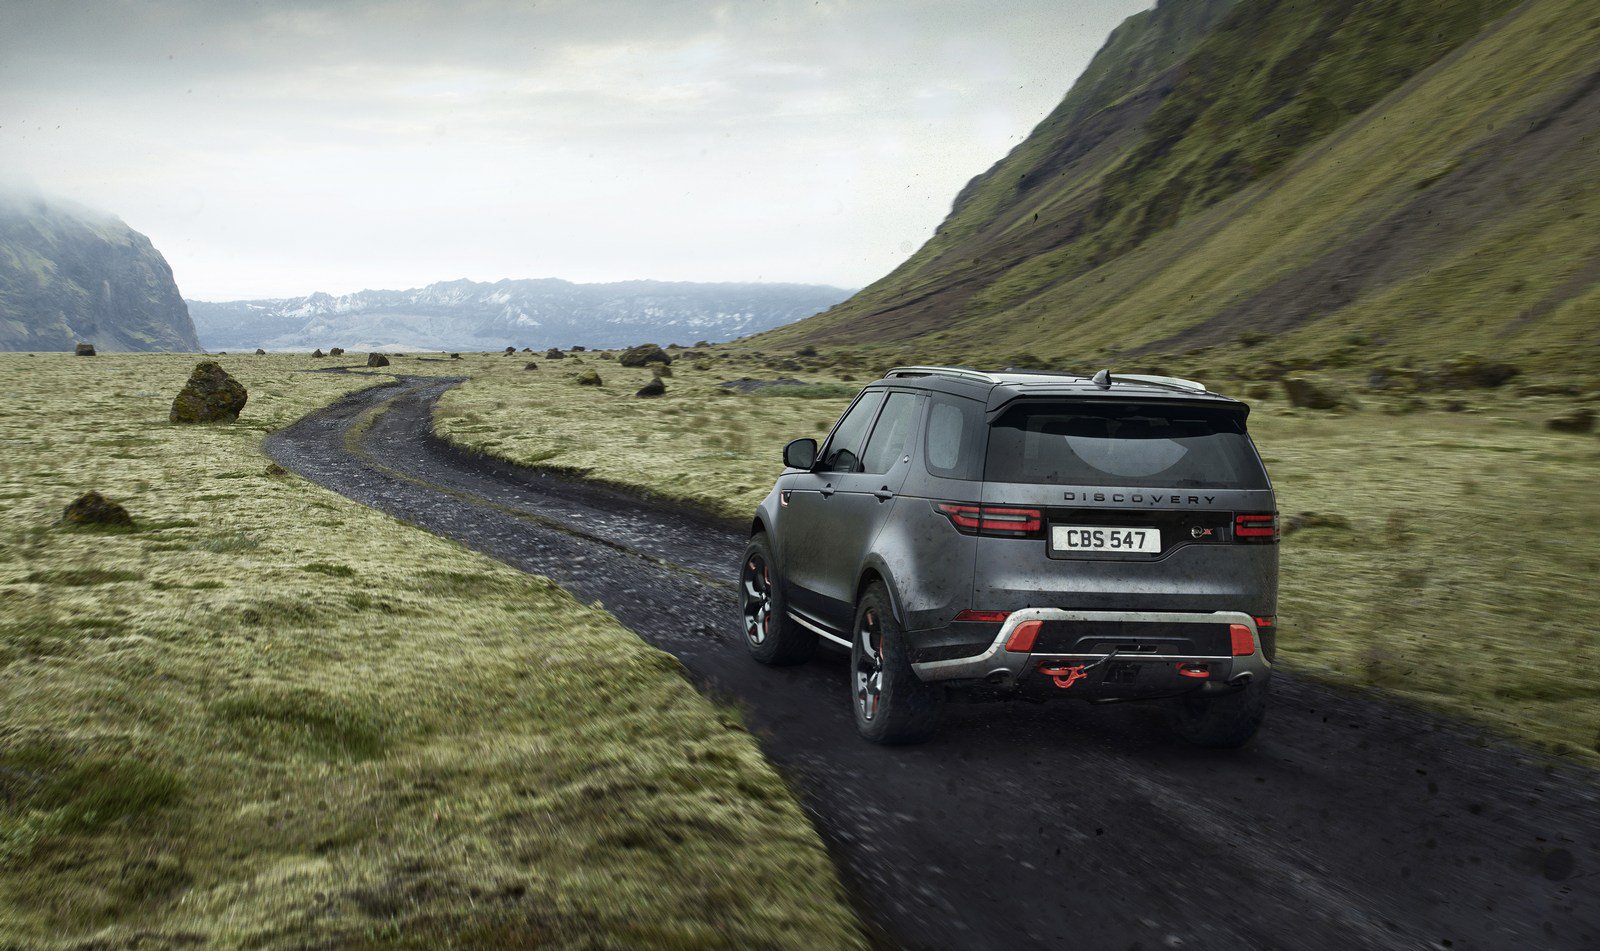 ¡Cancelado! El Land Rover Discovery SVX no llegará finalmente a producción